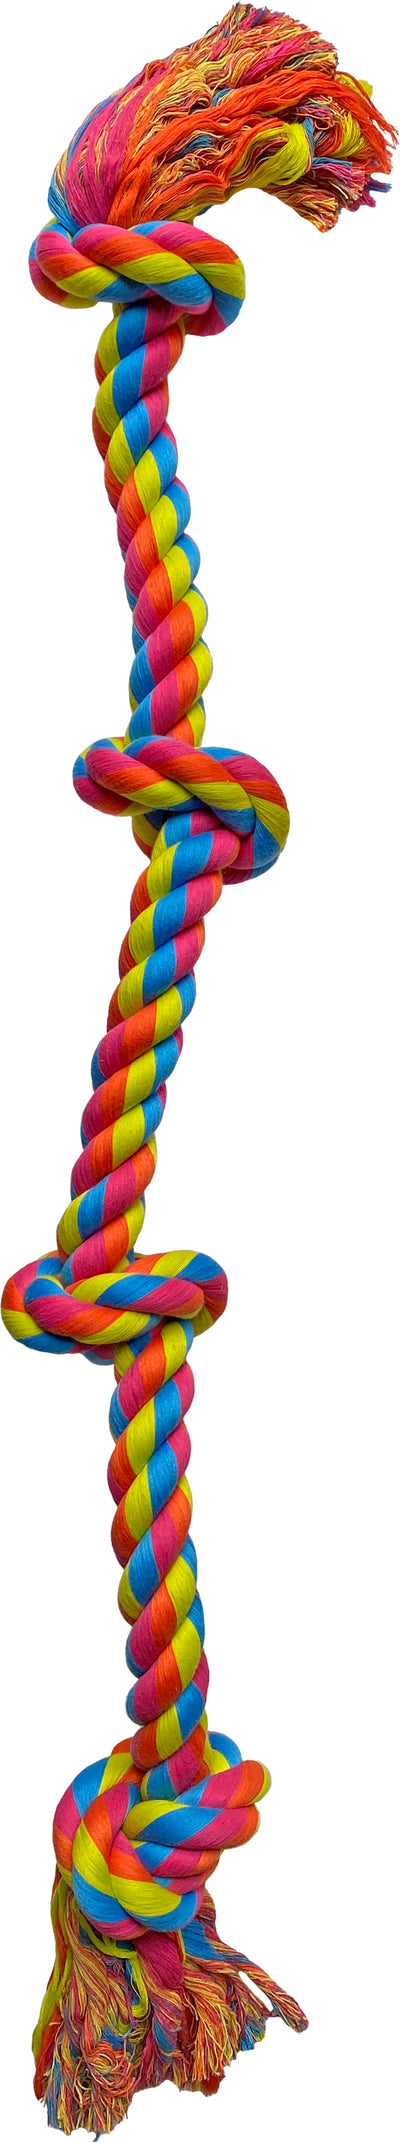 4 Knot Extreme Rope Rainbow